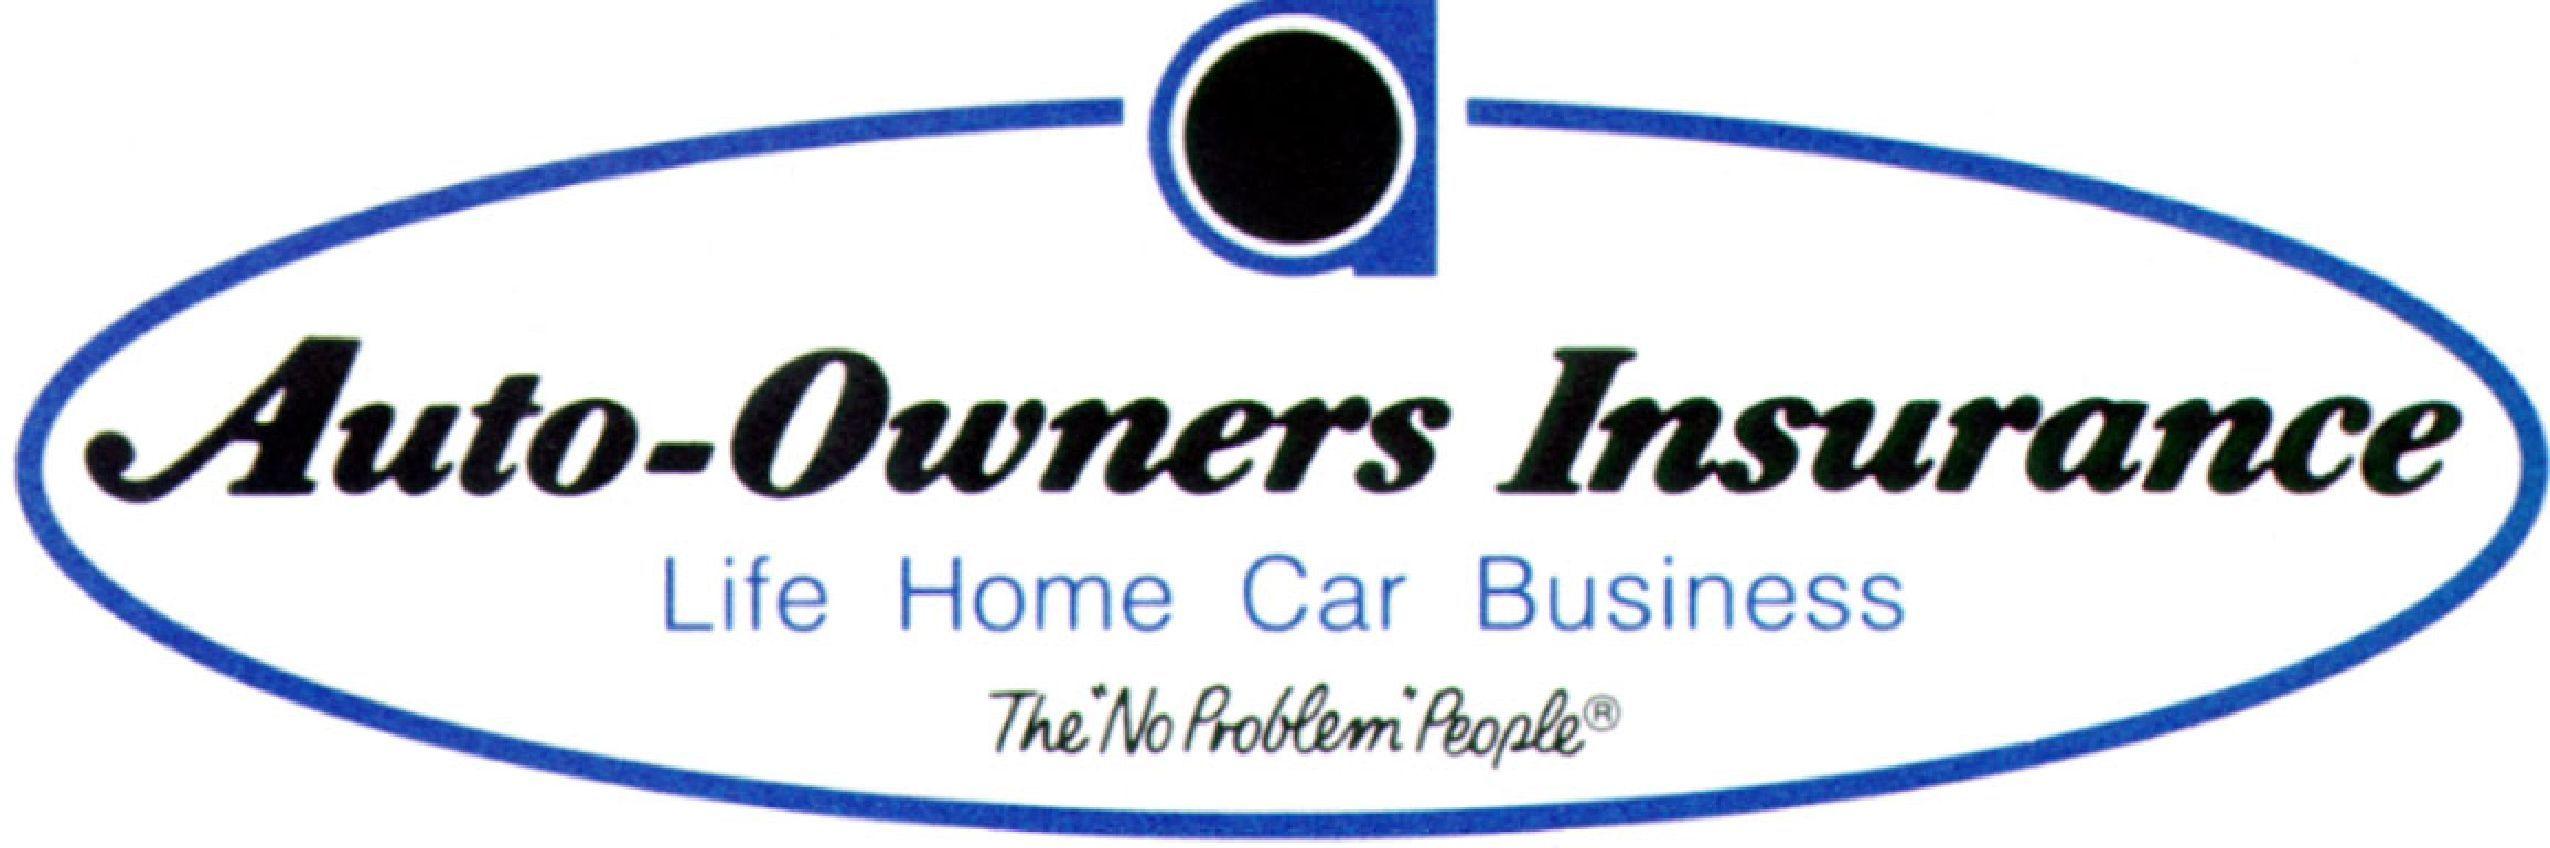 Travelers Insurance Company Logo - Tennessee travelers insurance company